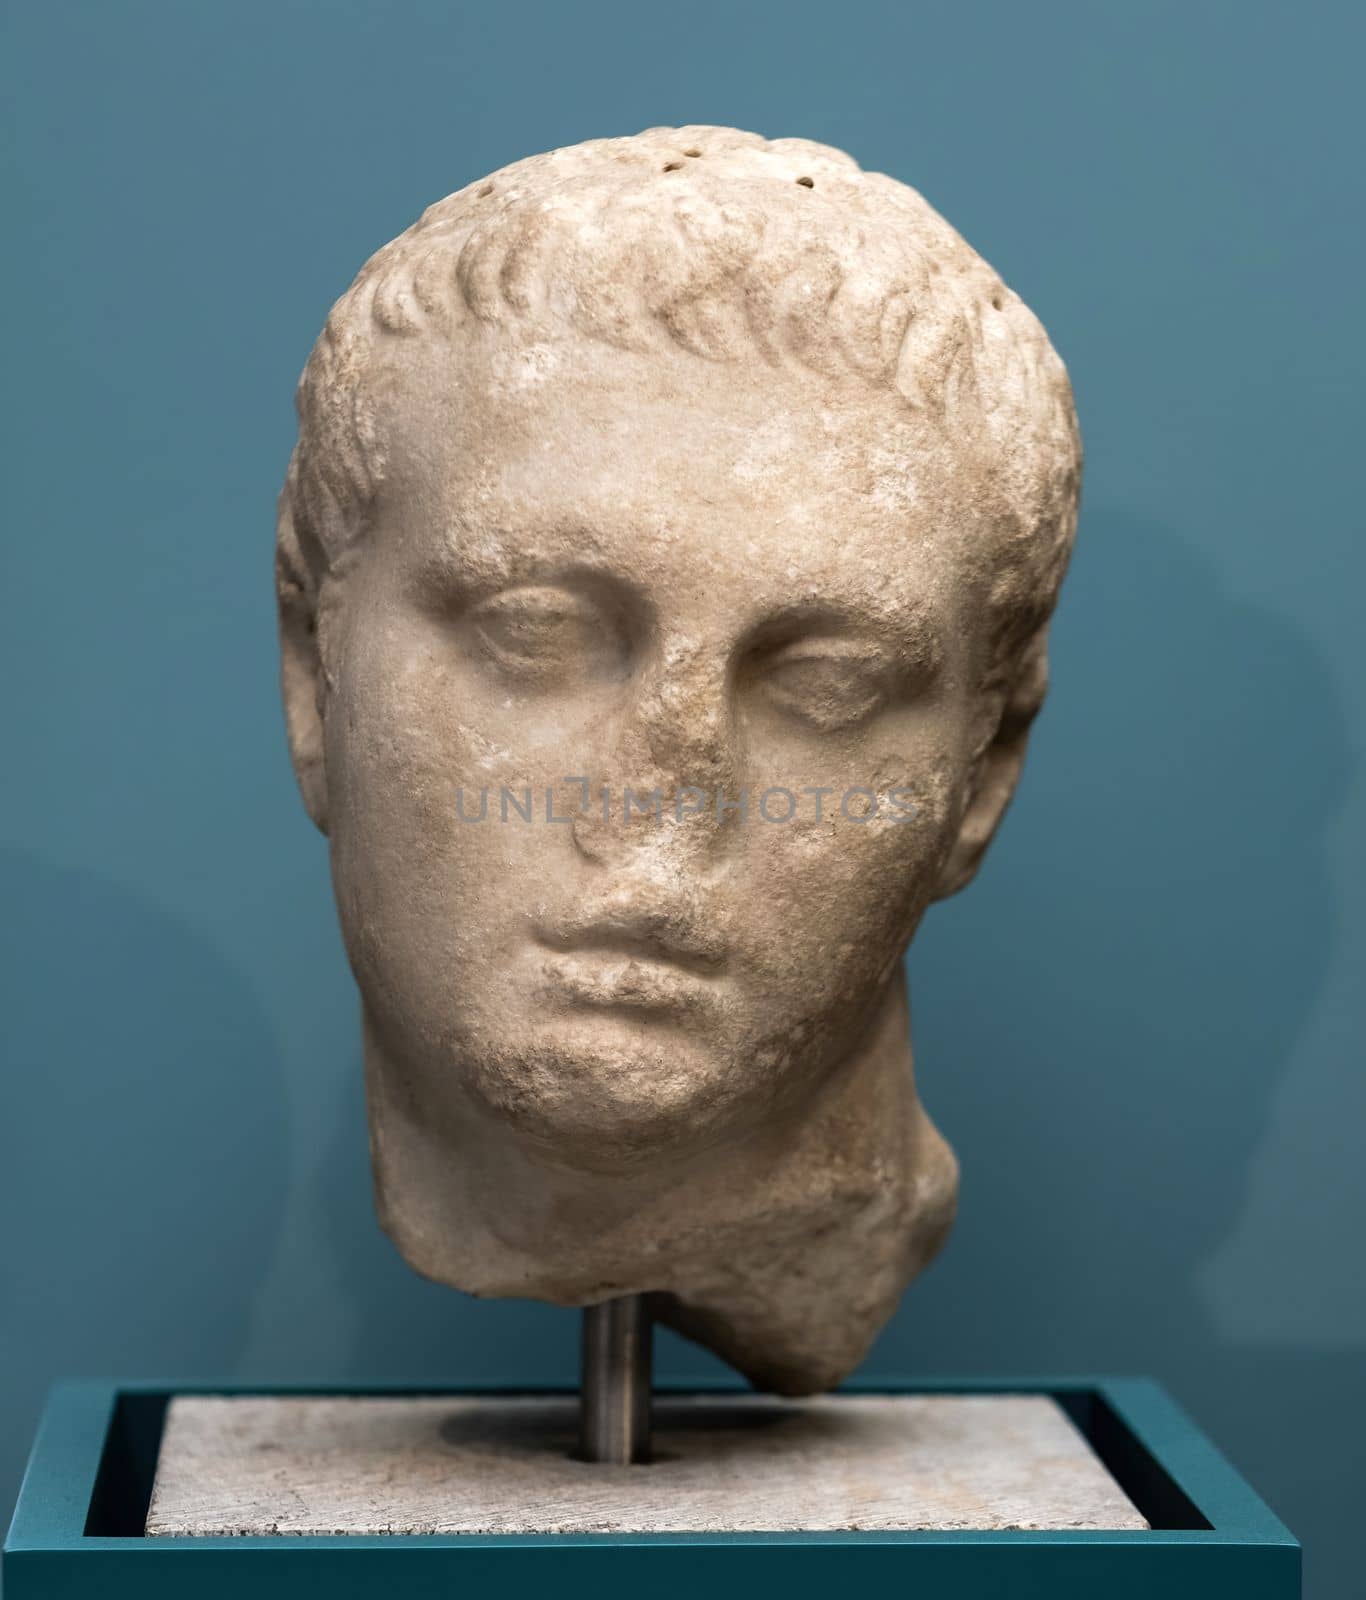 Berlin, Germany - 18 September 2019: Sculpture bust of Ptolemy III in Berlin museum. Statue head at art exhibition in Germany